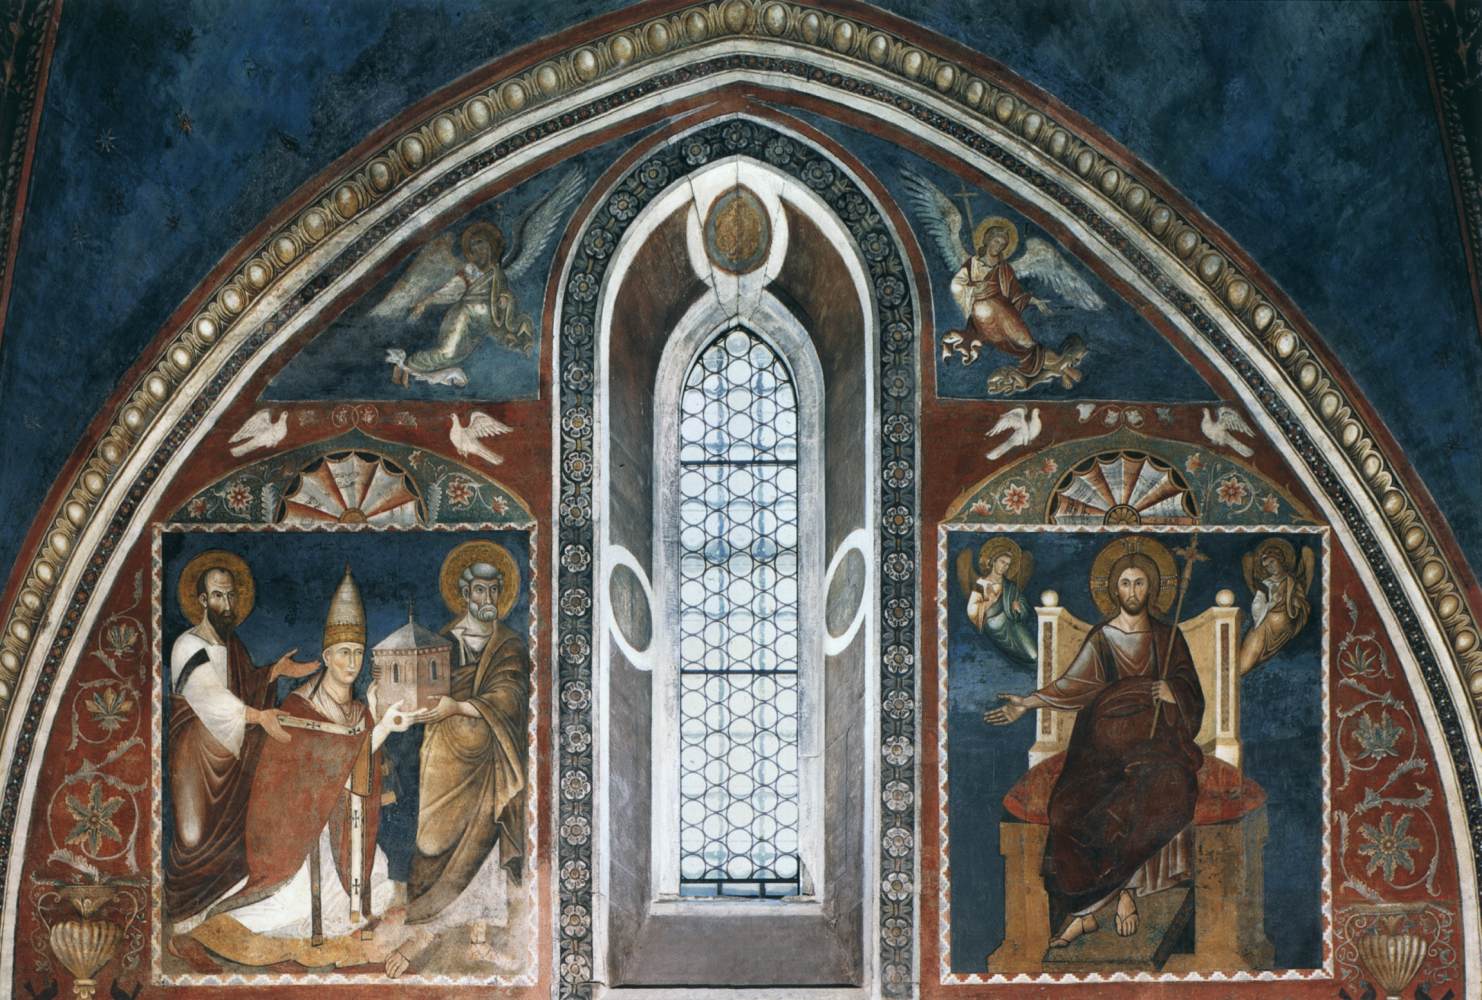 1278-79 Pope Nicholas III Presented to Christ by Sts Peter and Paul Sancta Sanctorum, Latran Rome